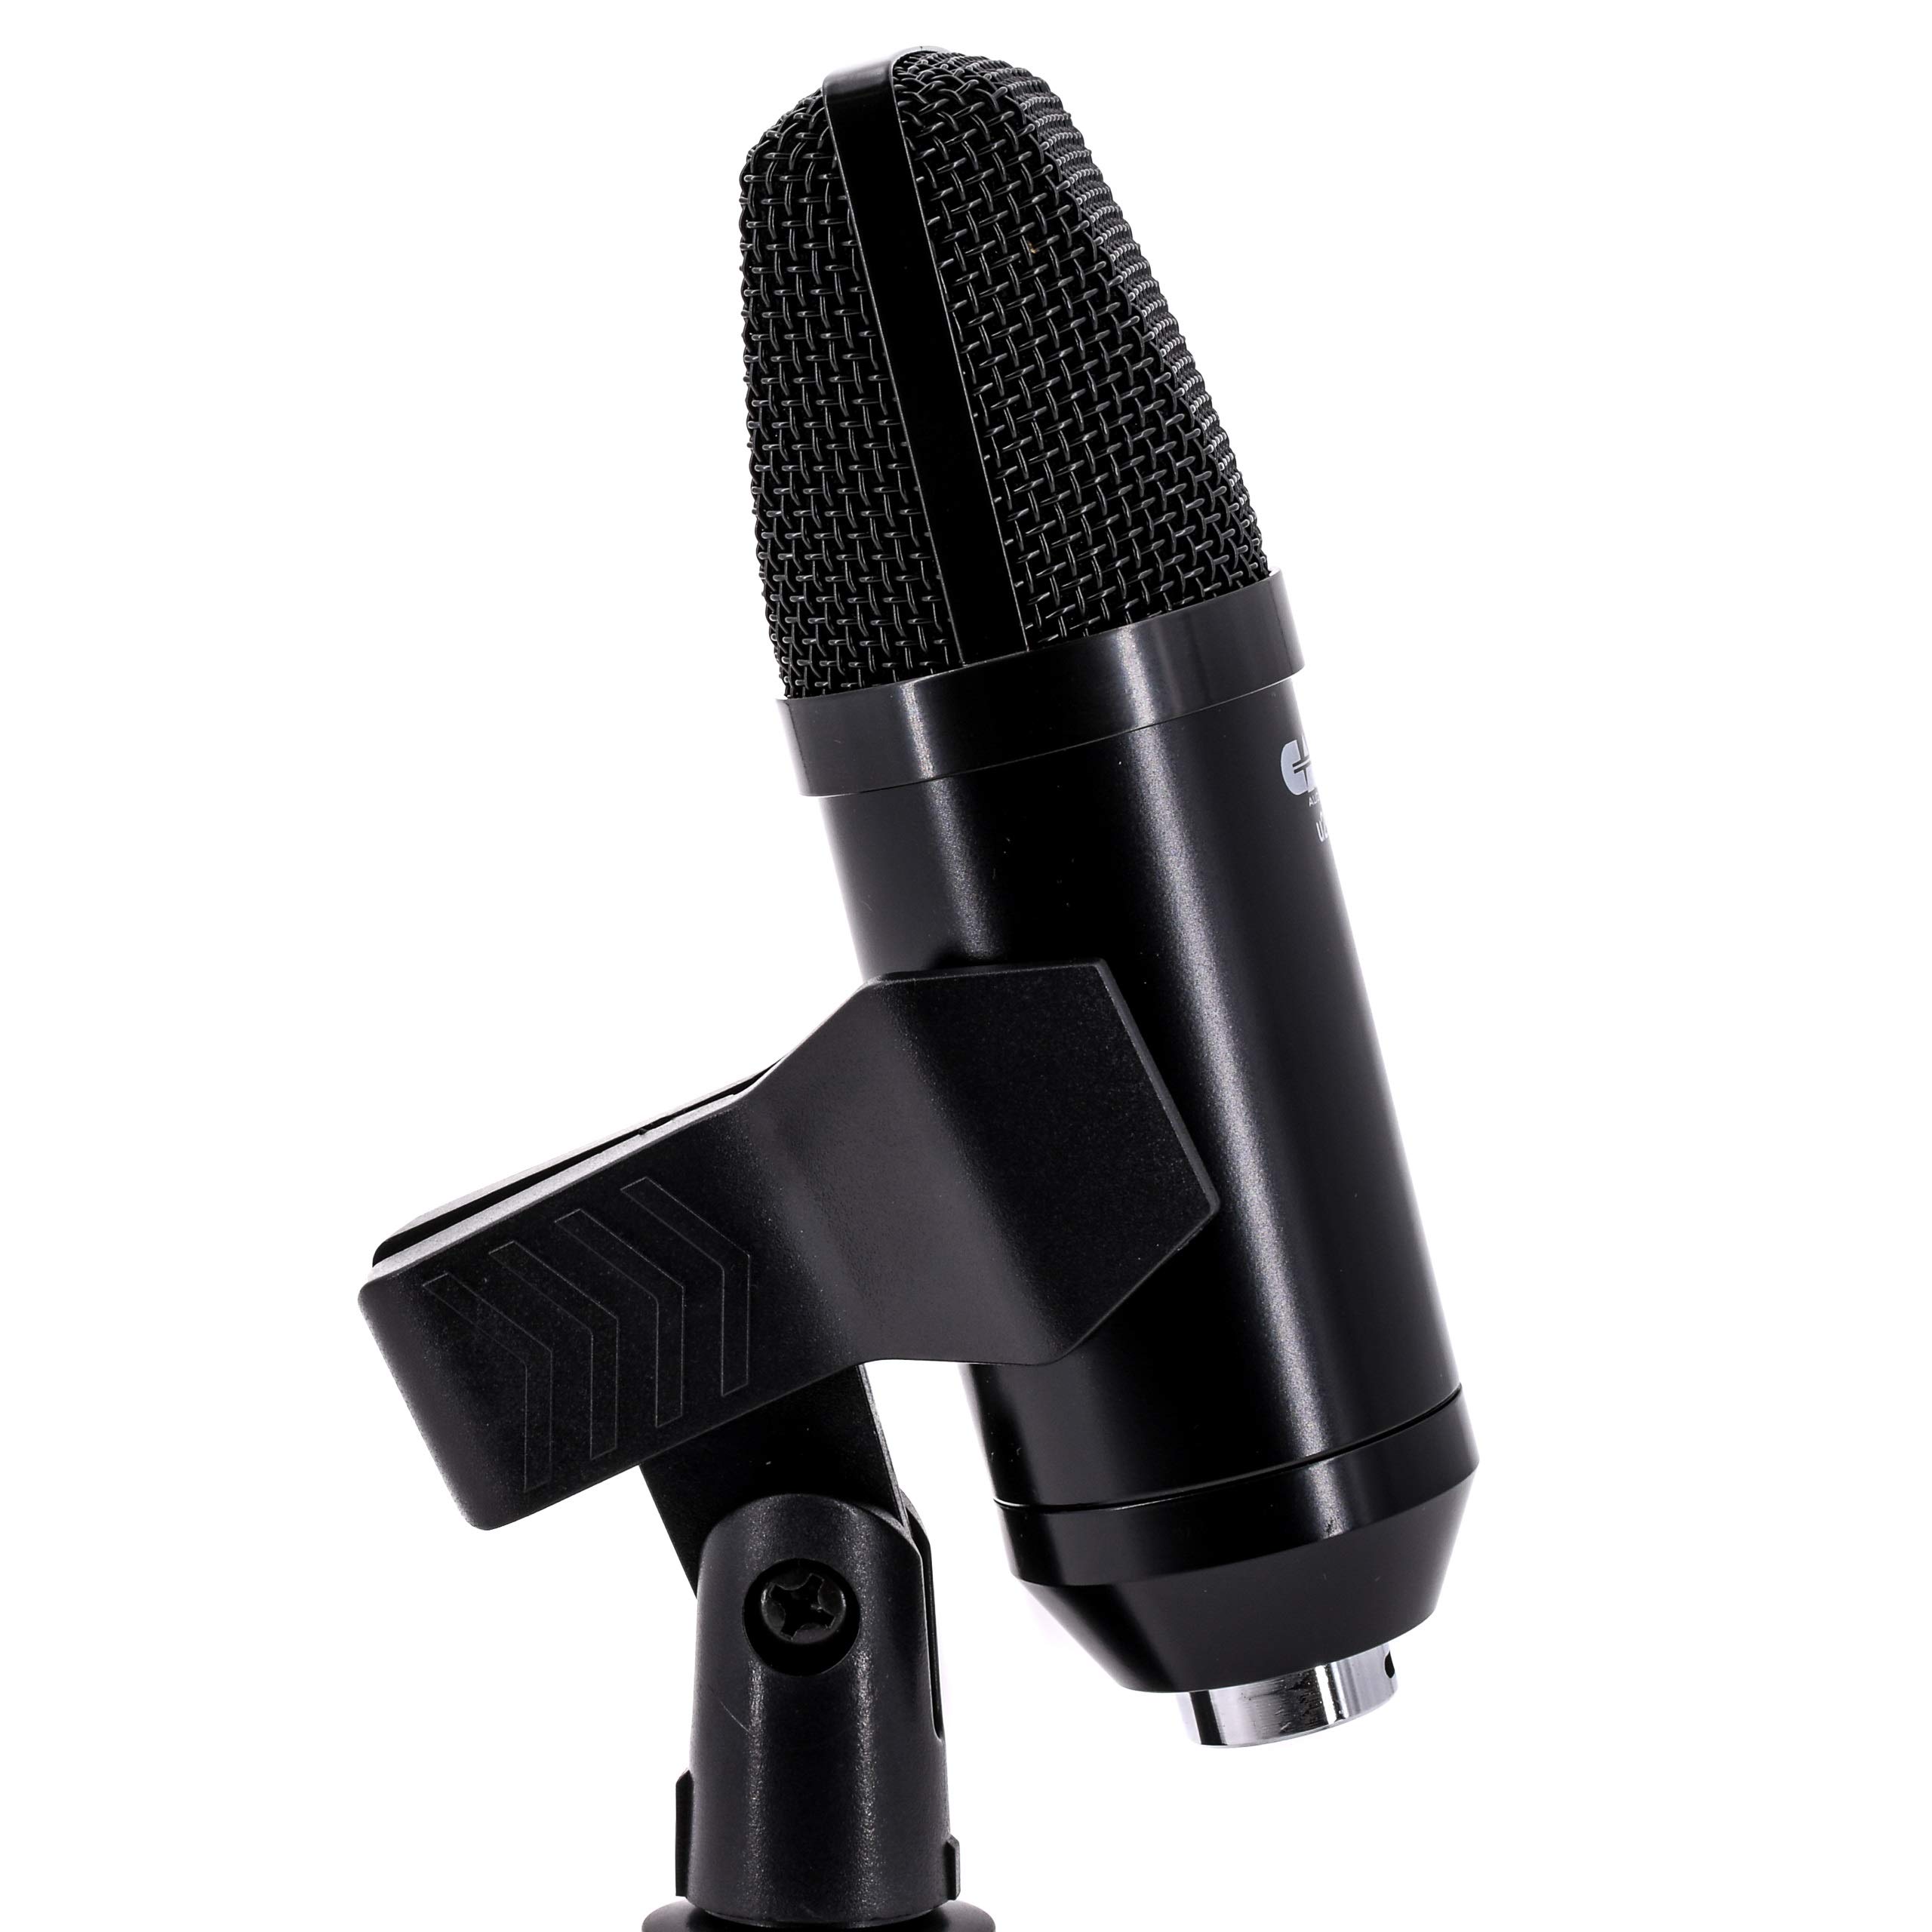 CAD Audio U29 USB Large Format Side Address Studio Microphone